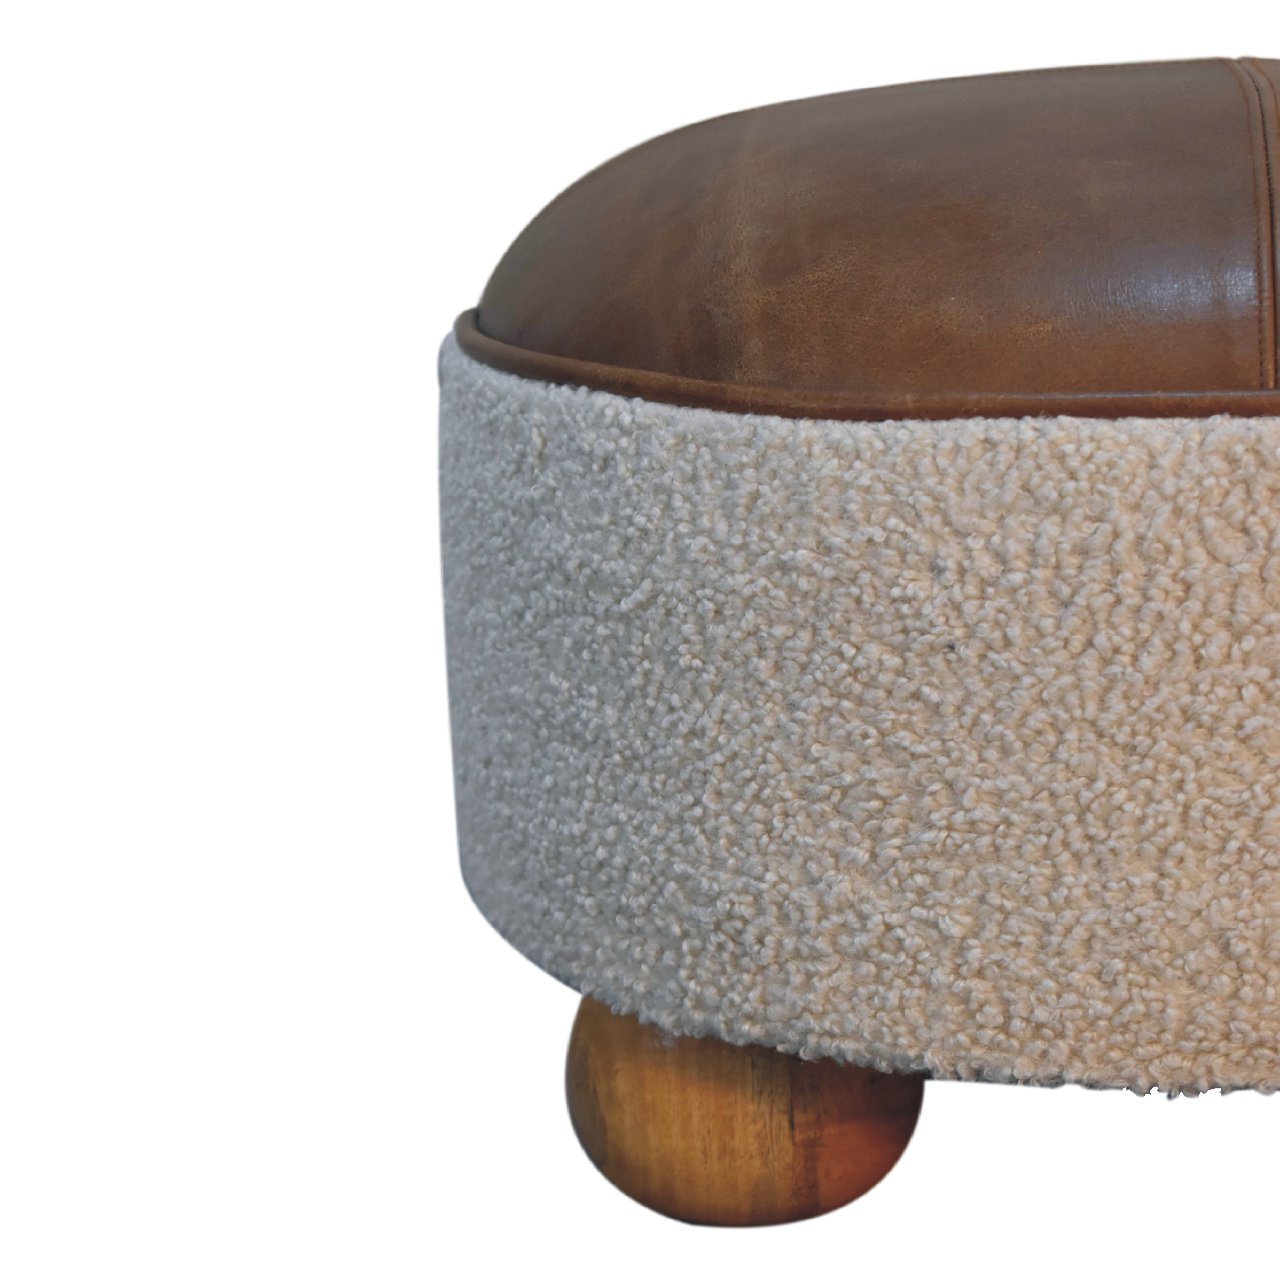 Cream Boucle Buffalo Hide Round Footstool with Ball Feet